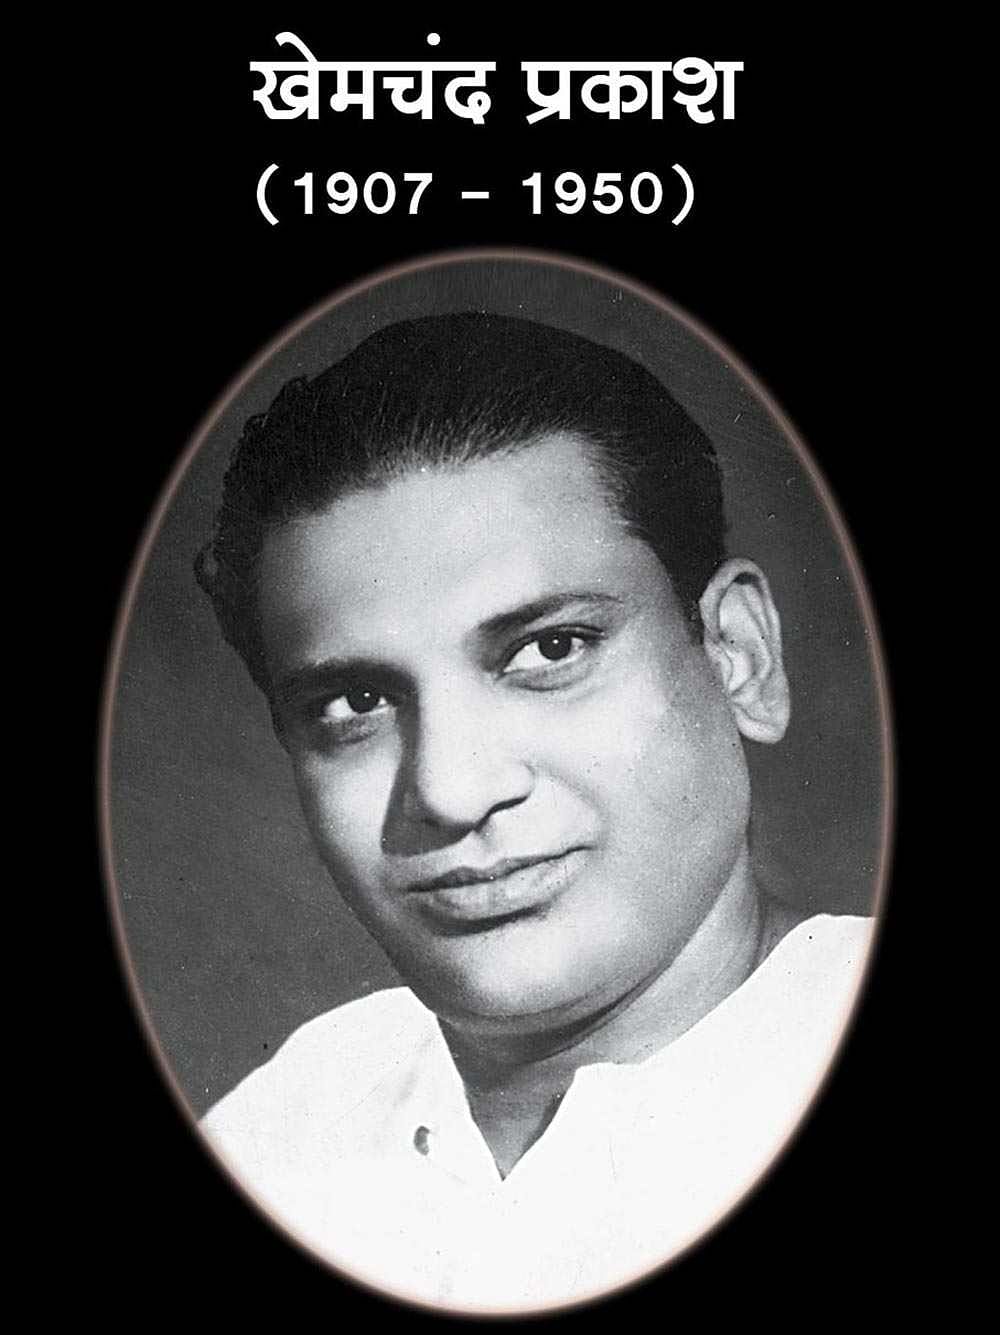 Remembering the forgotten legend of Khemchand Prakash who gave Kishore and Lata their big break